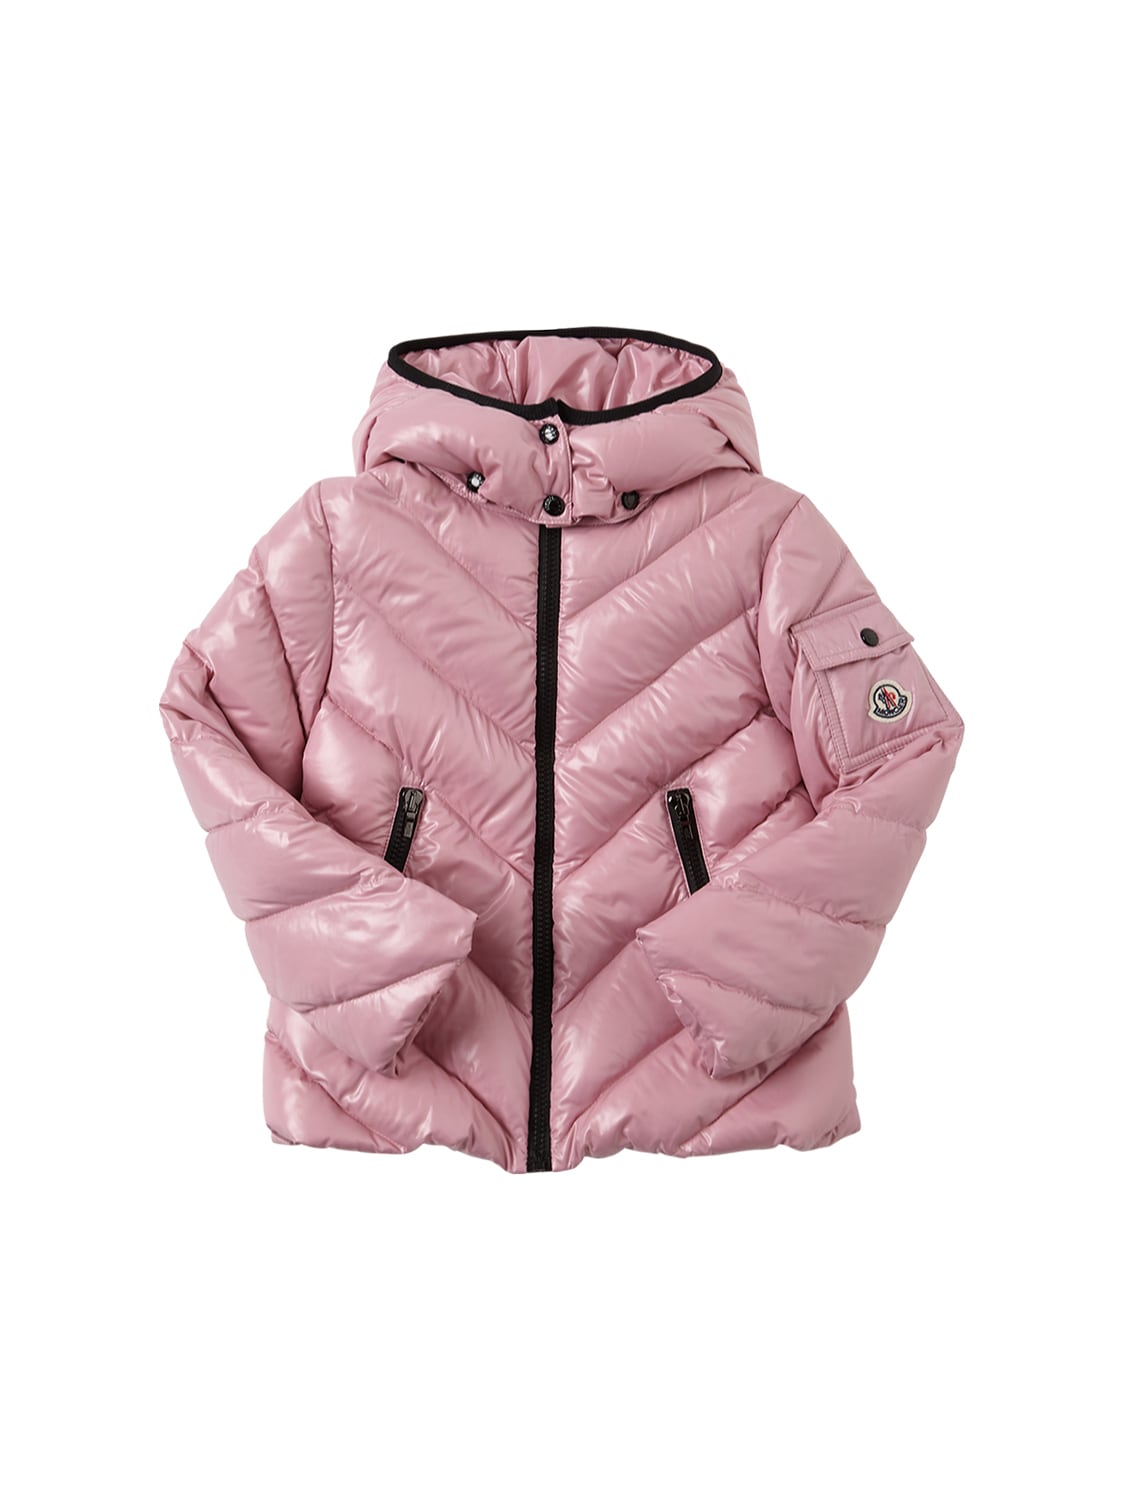 moncler coat pink